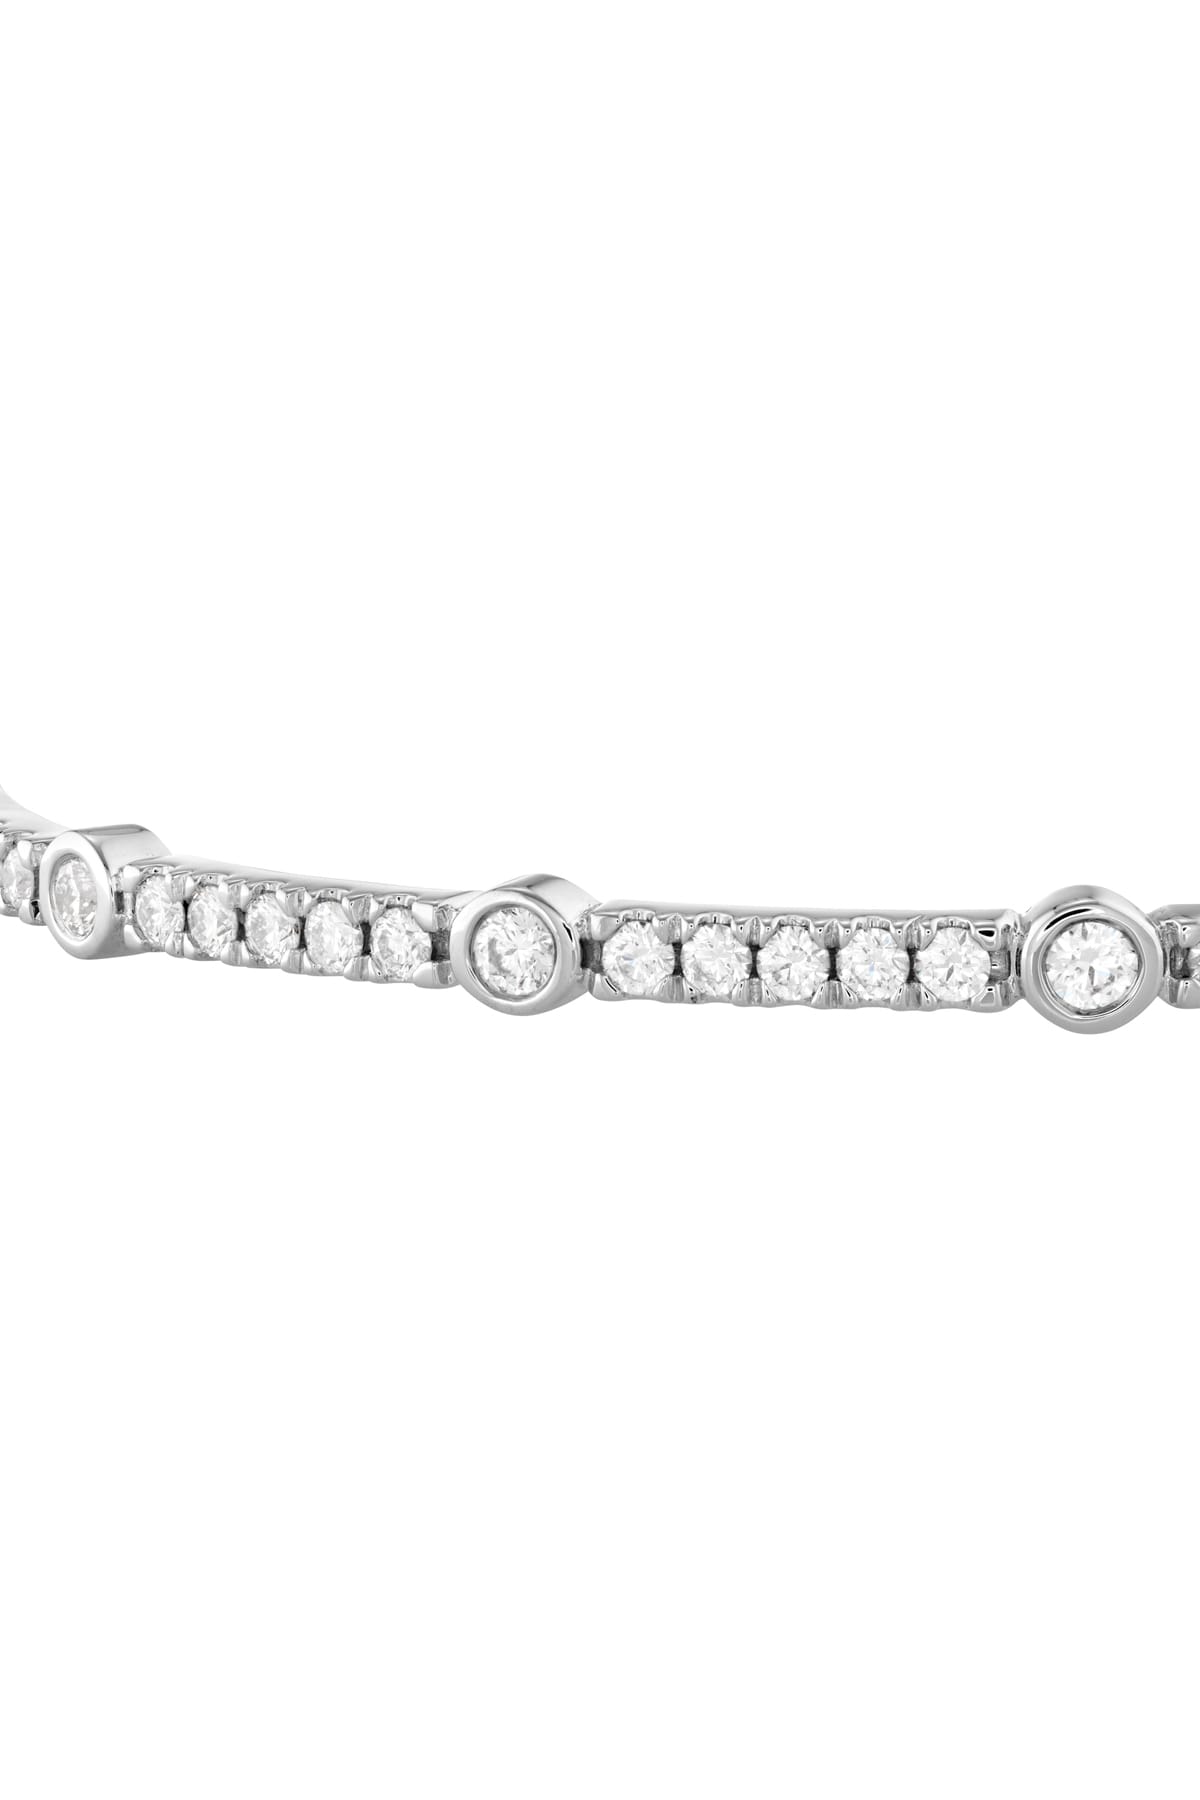 Copley Diamond Bracelet From Hearts On Fire available at LeGassick Diamonds and Jewellery Gold Coast, Australia.